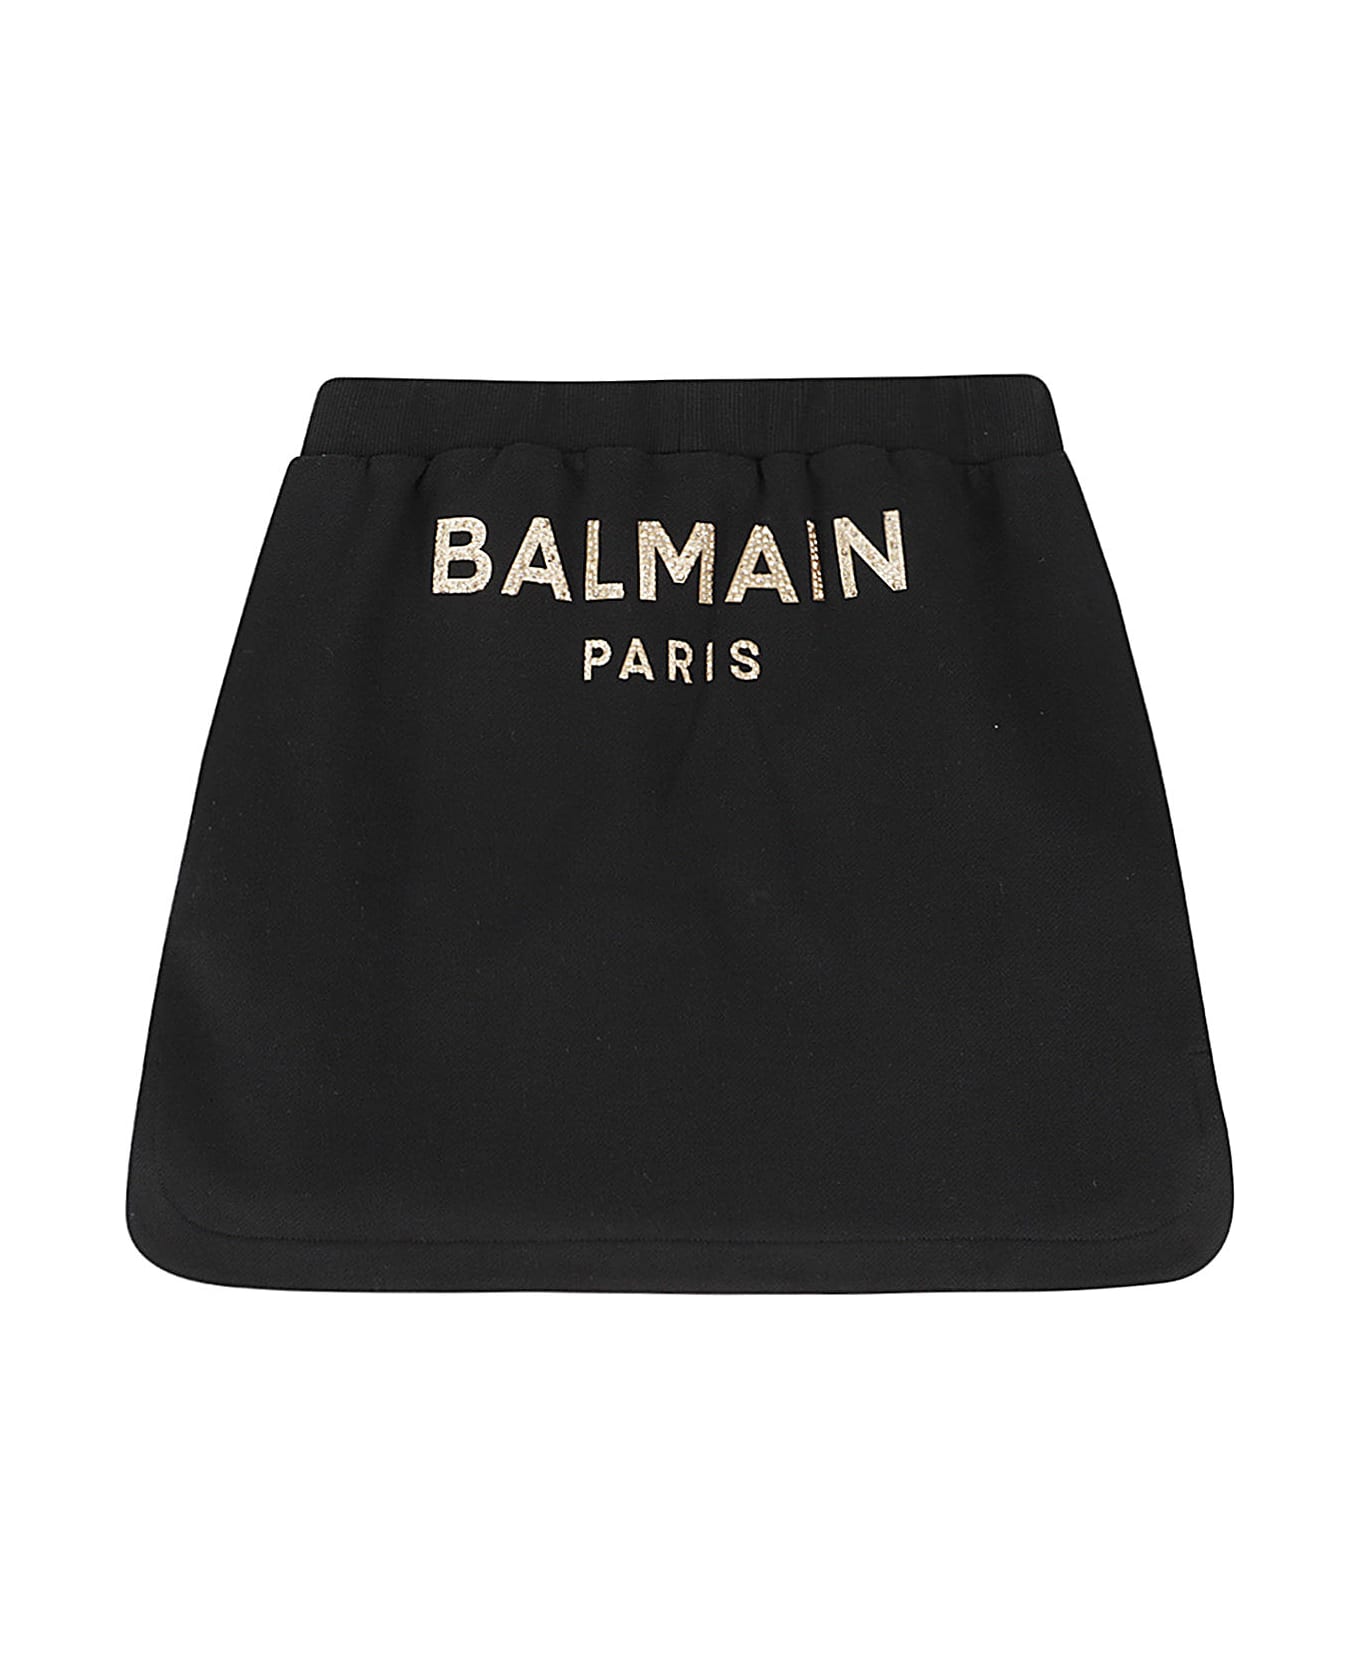 Balmain Skirt - Or Black Gold ボトムス